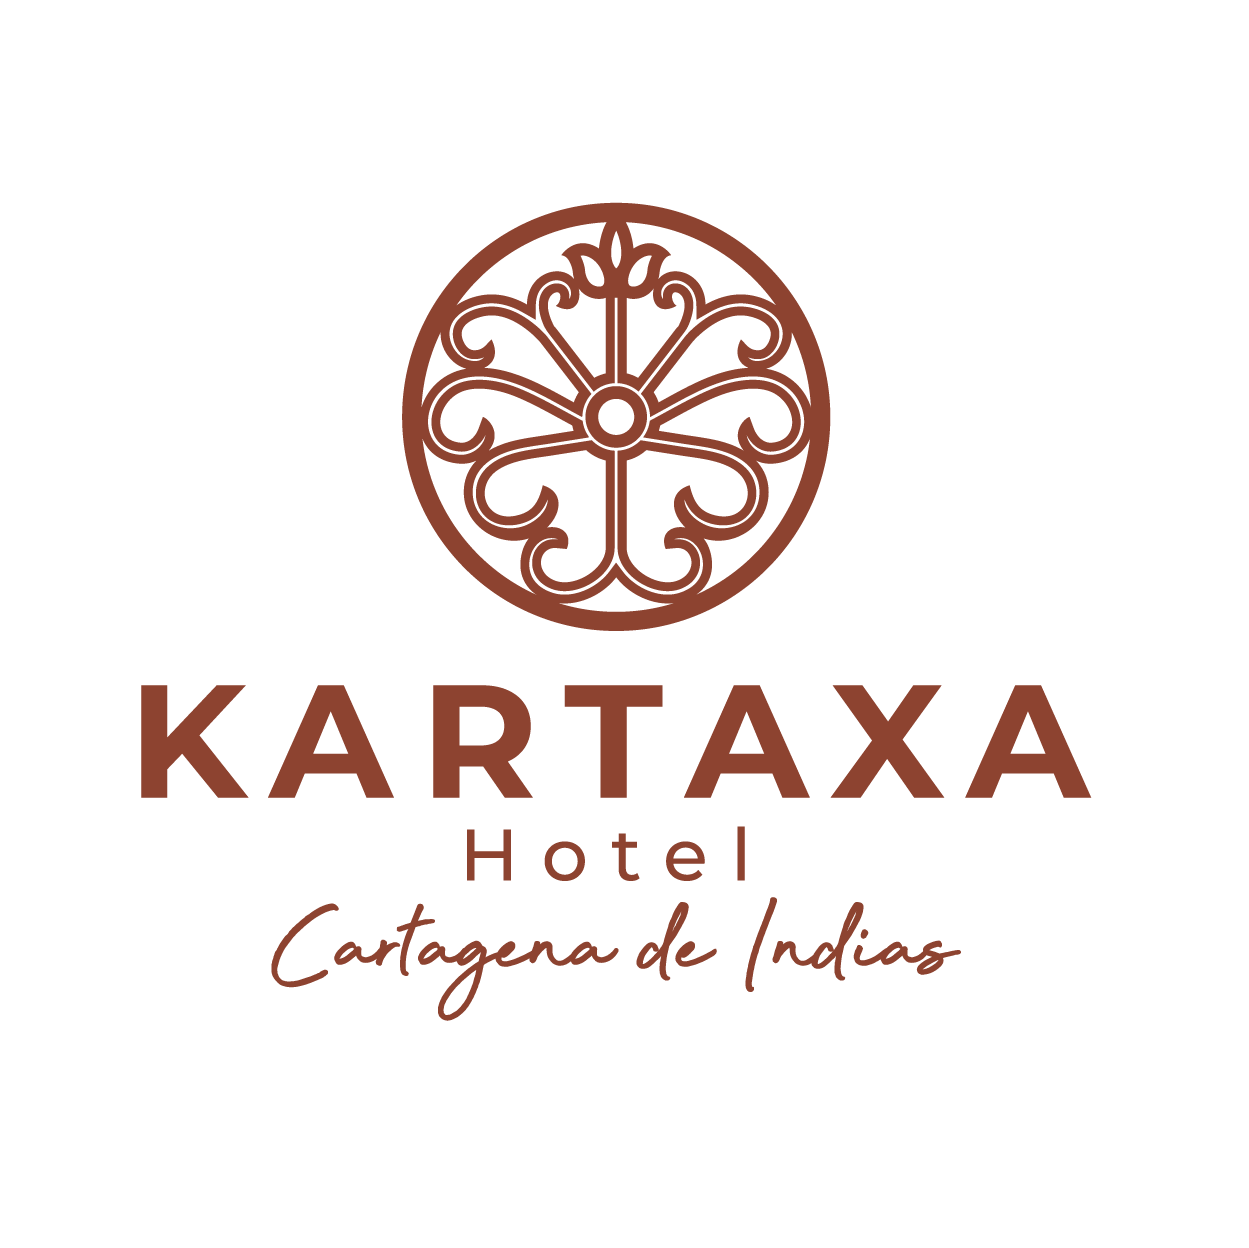 Logo Hotel Cartagena centro hístorico Kartaxa